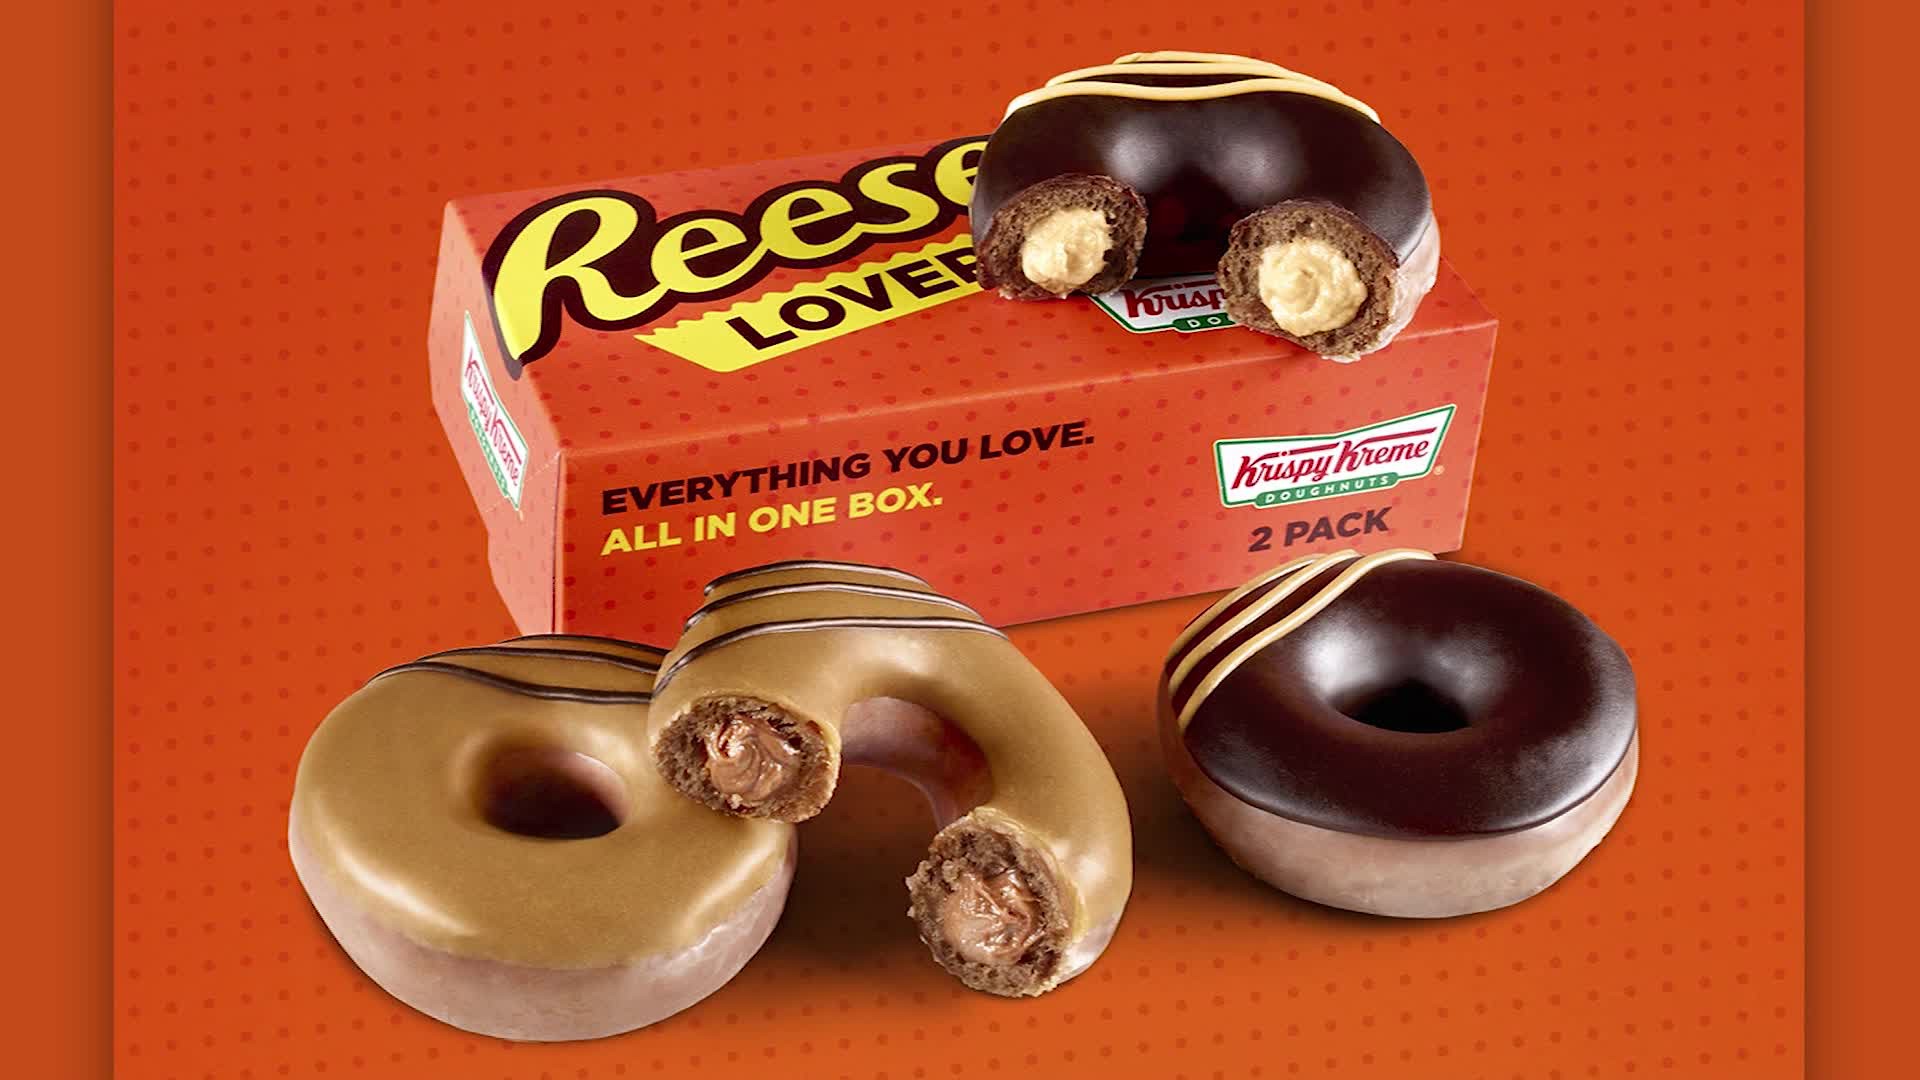 Krispy Kreme releases Reese's stuffed donuts